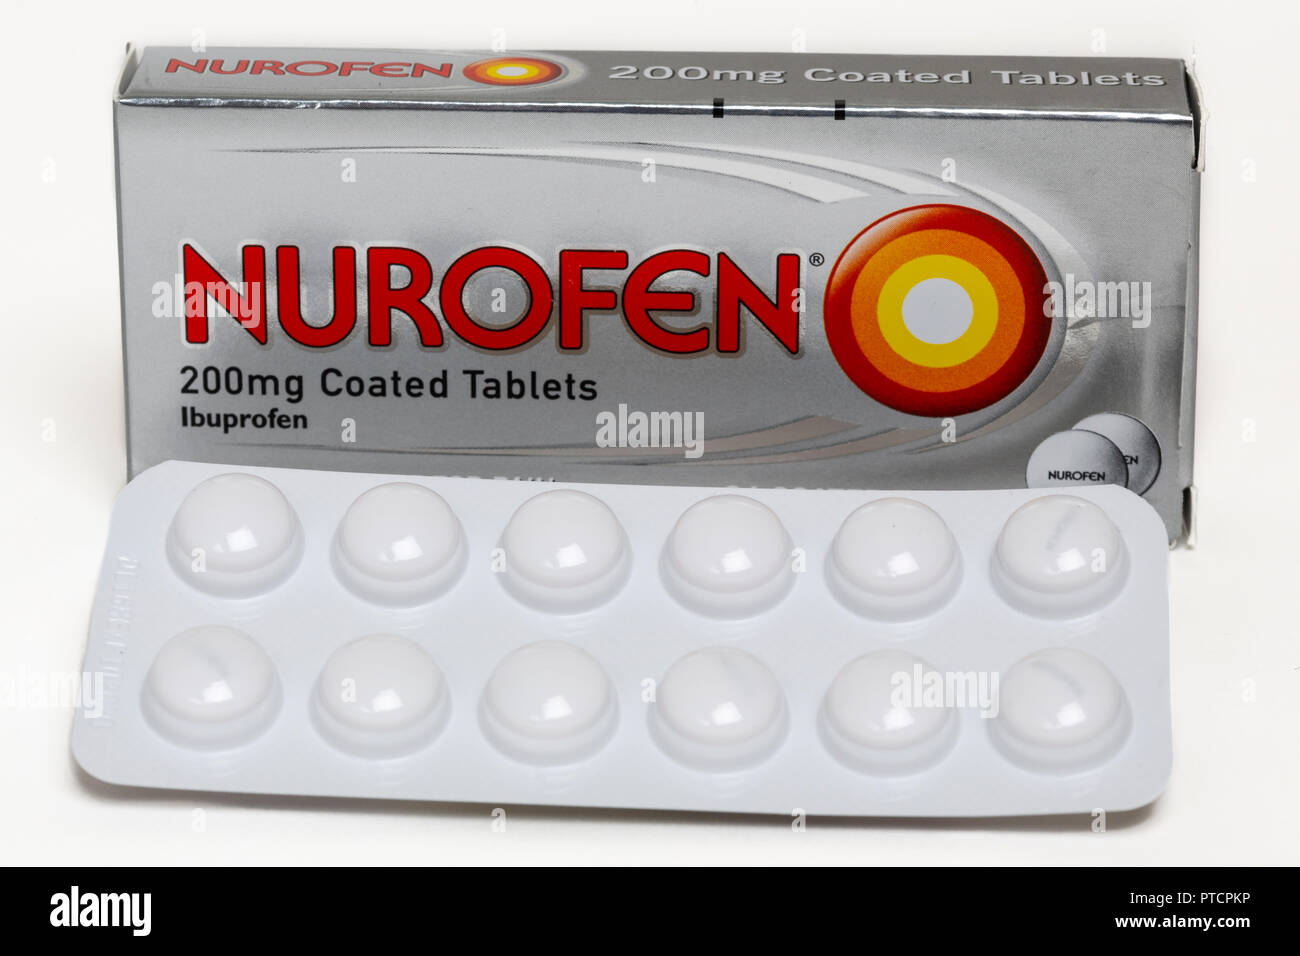 Nurofen, Ibuprofen brand name tablets Stock Photo